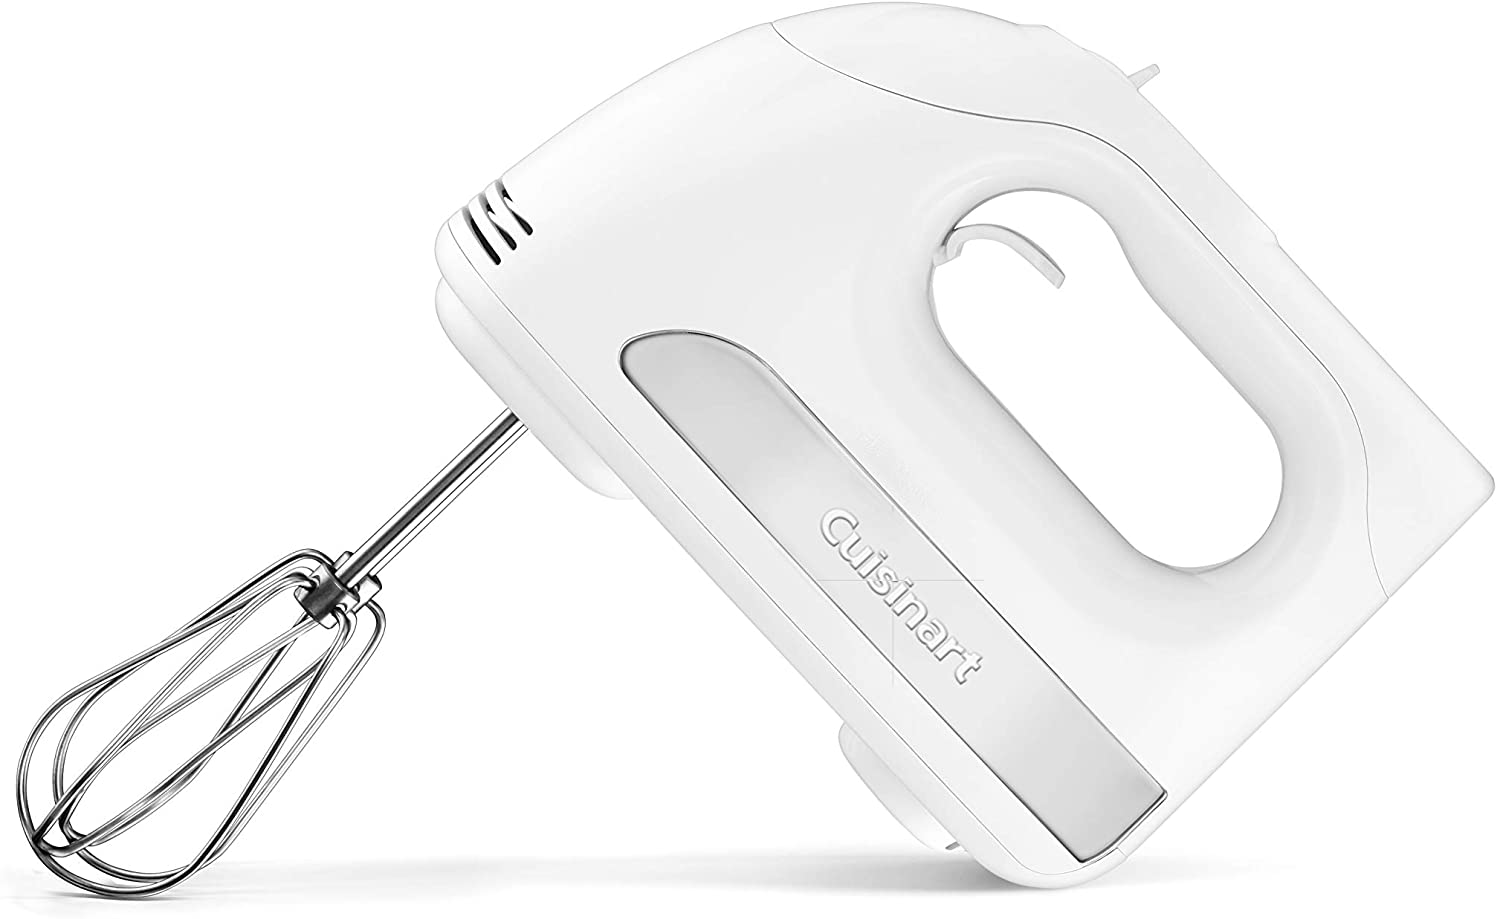 Cuisinart Power Advantage 3-Speed Hand Mixer – White